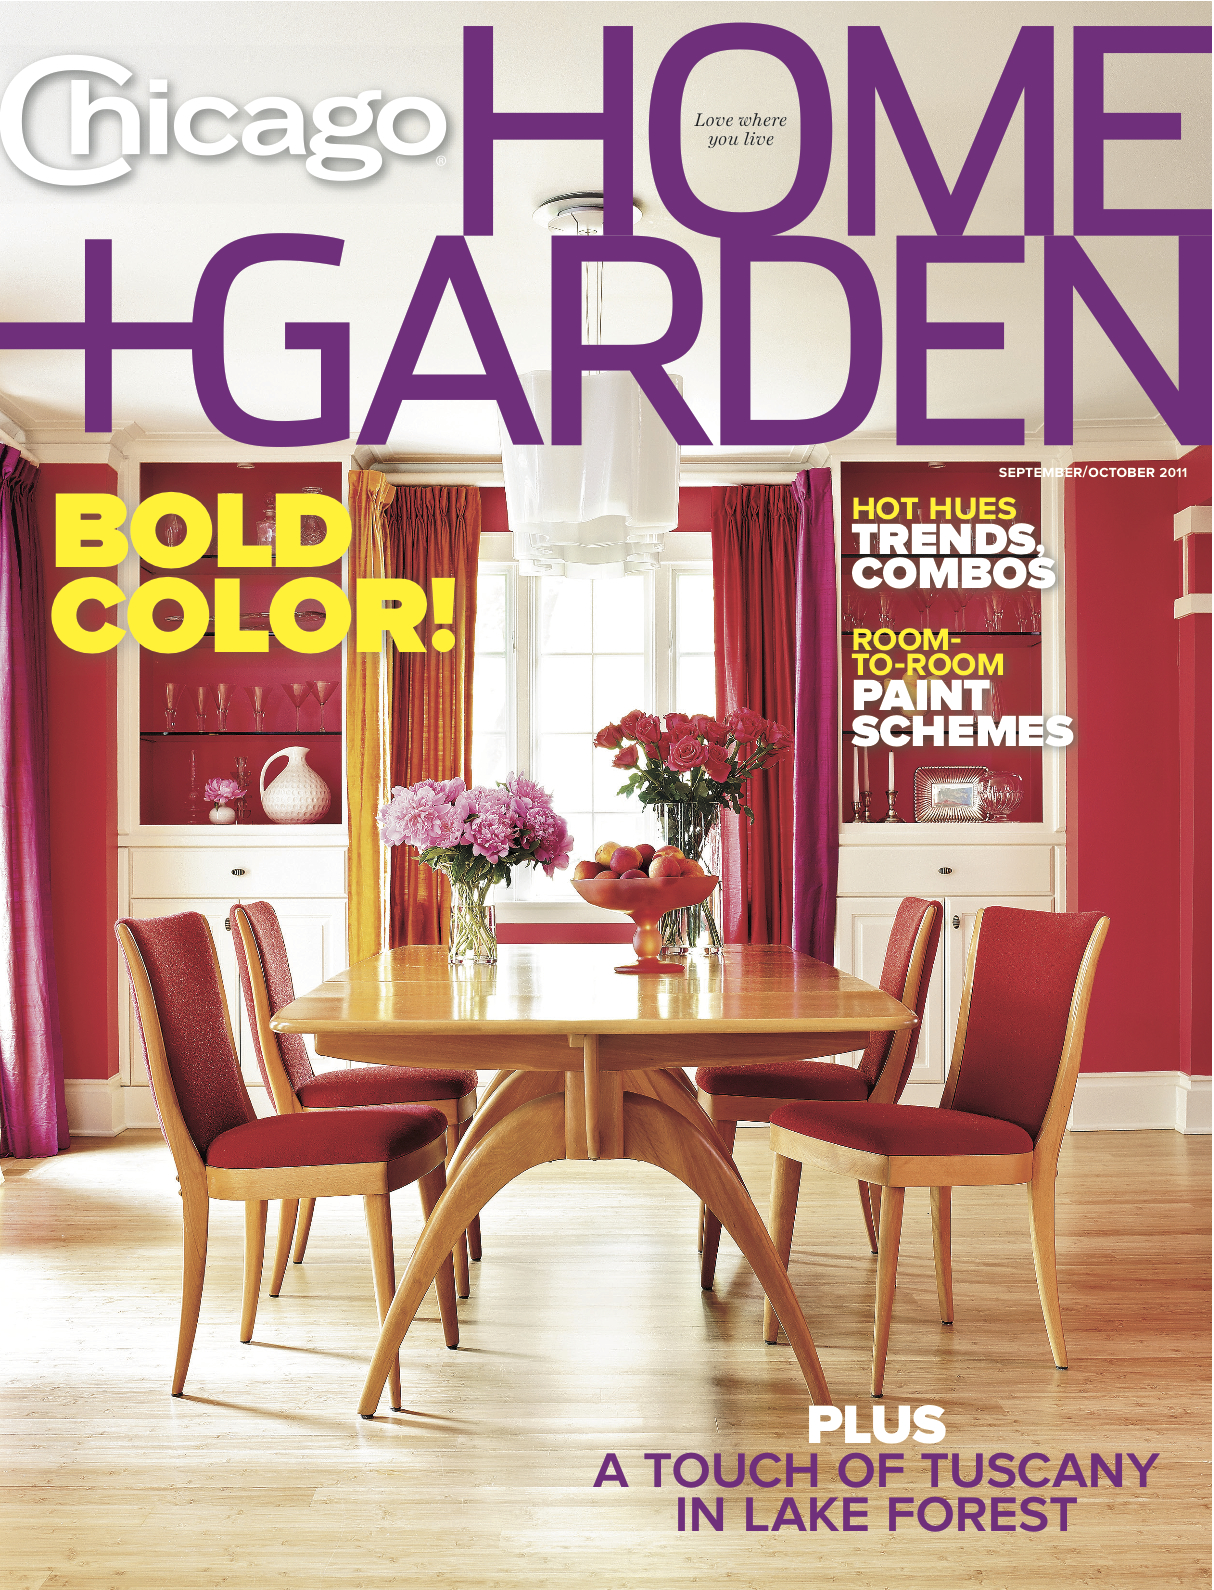 Chicago Home + Garden September October Color issue